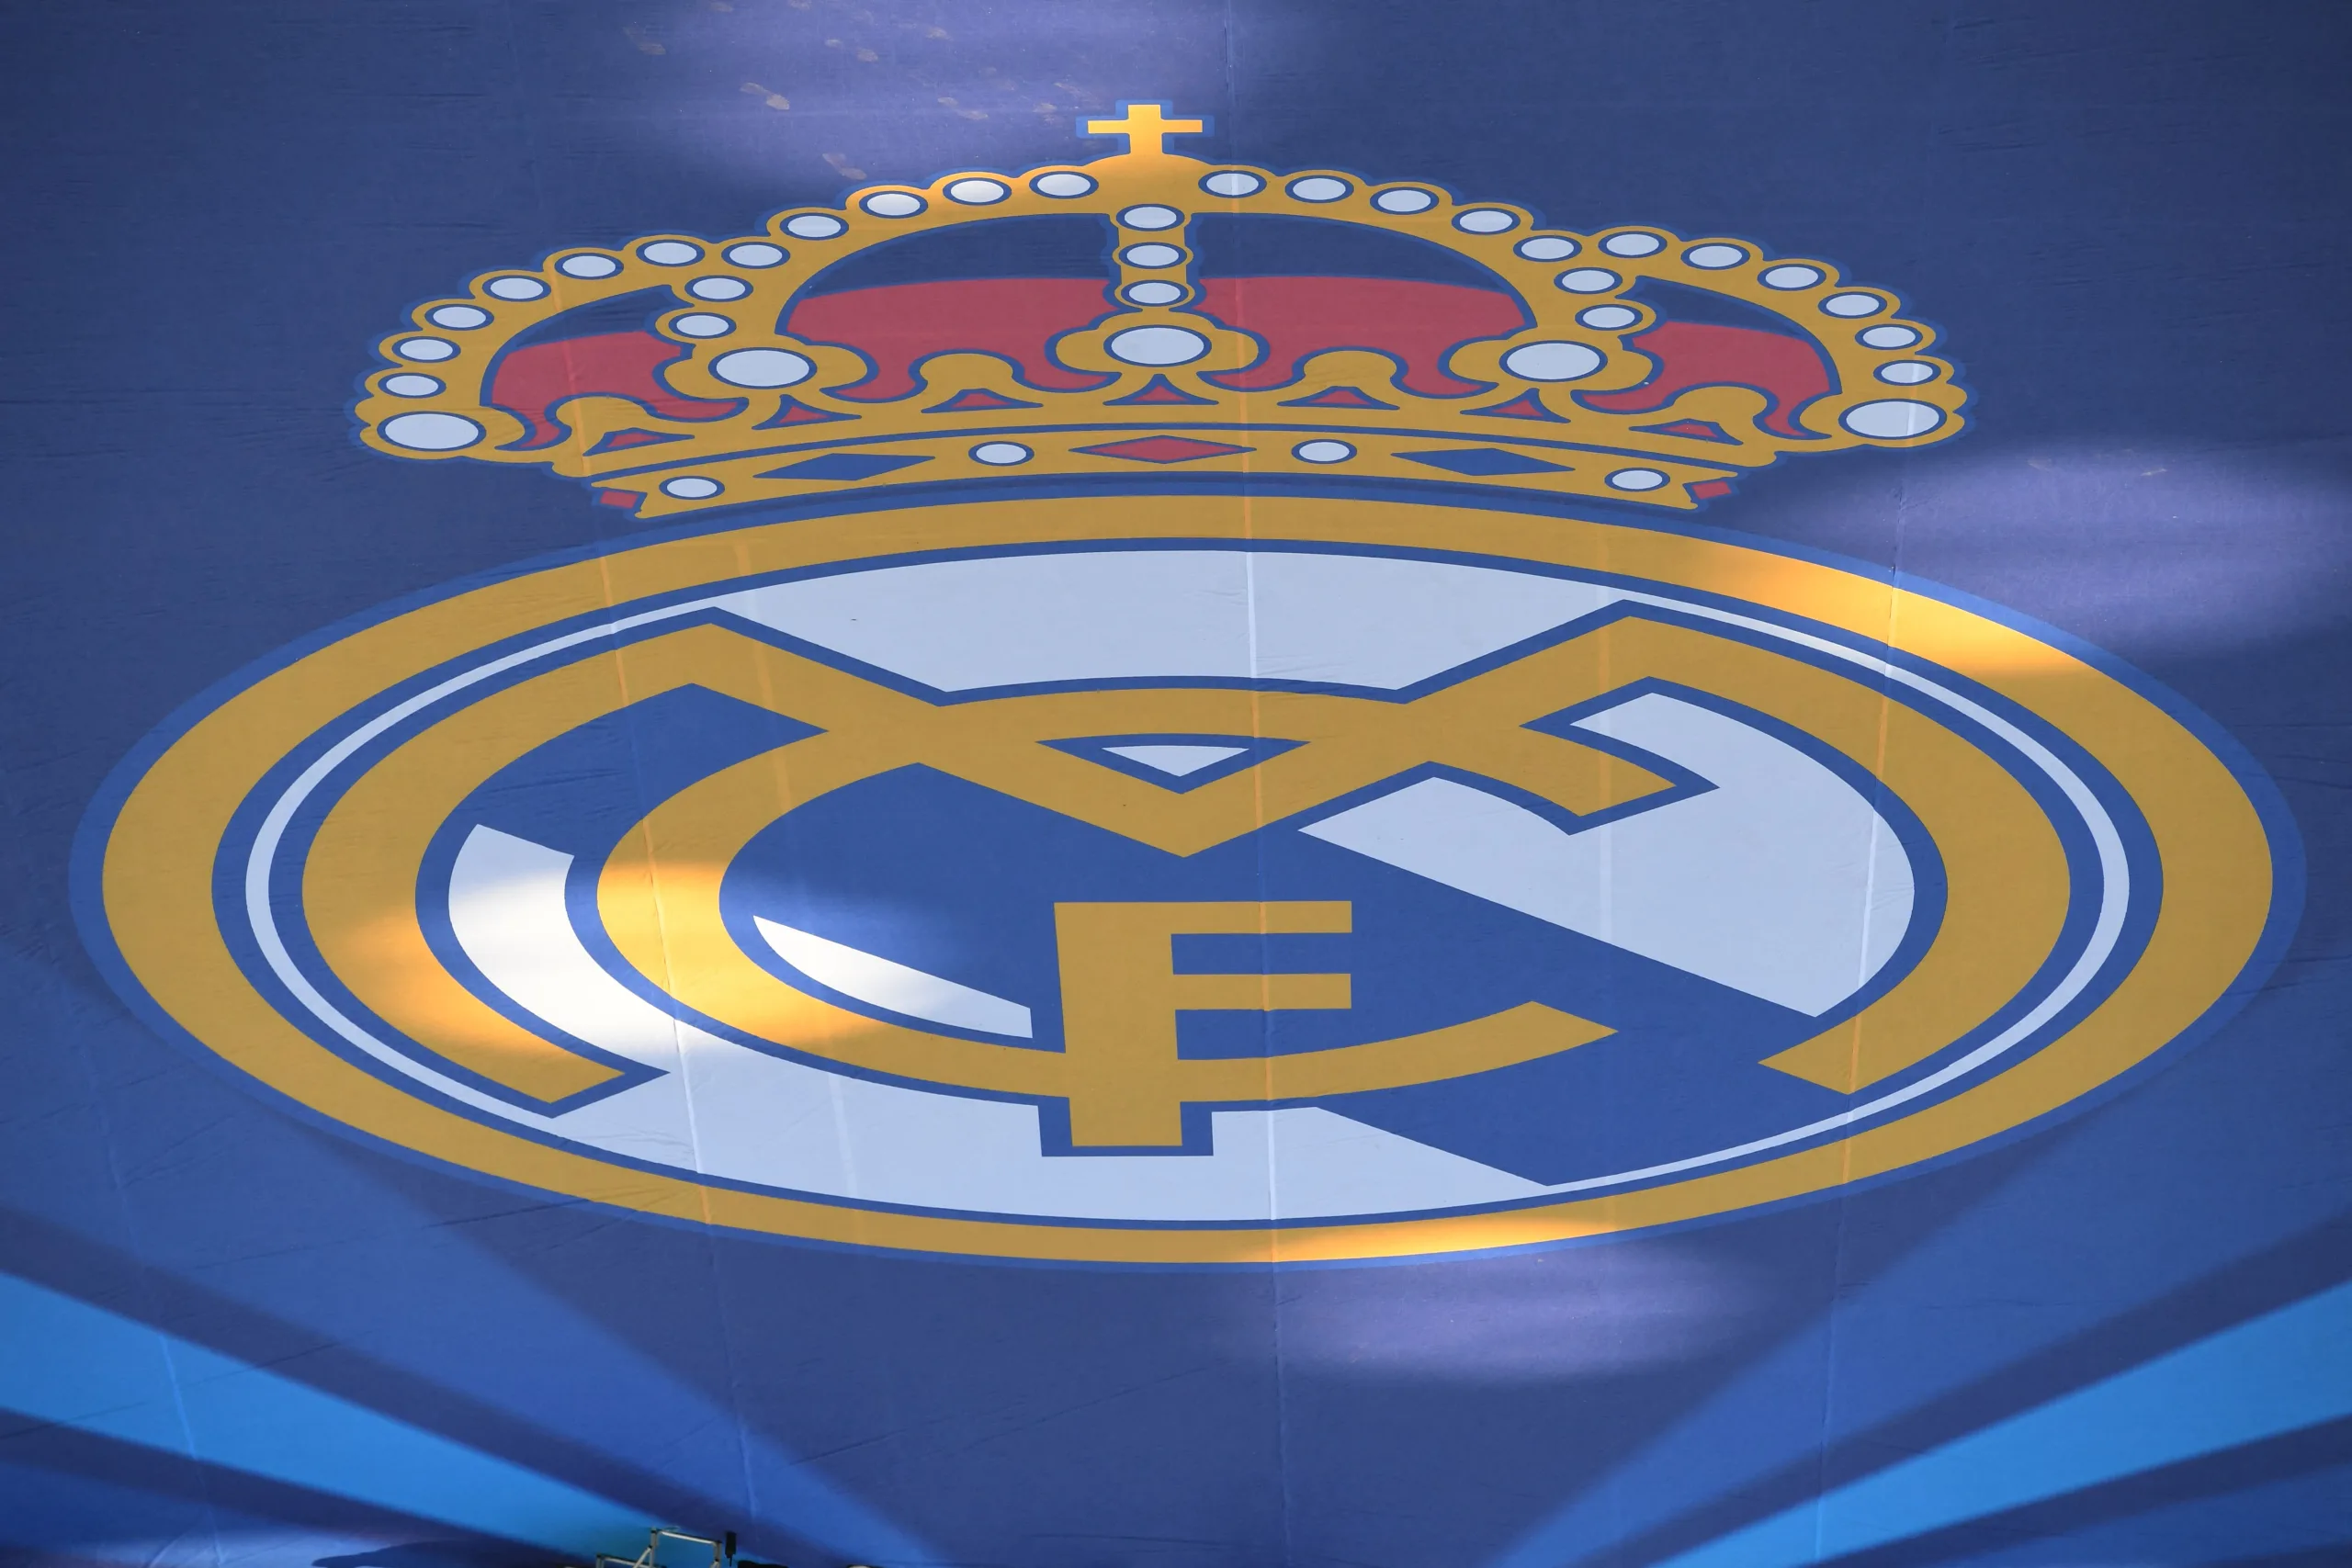 Real Madrid scandalo